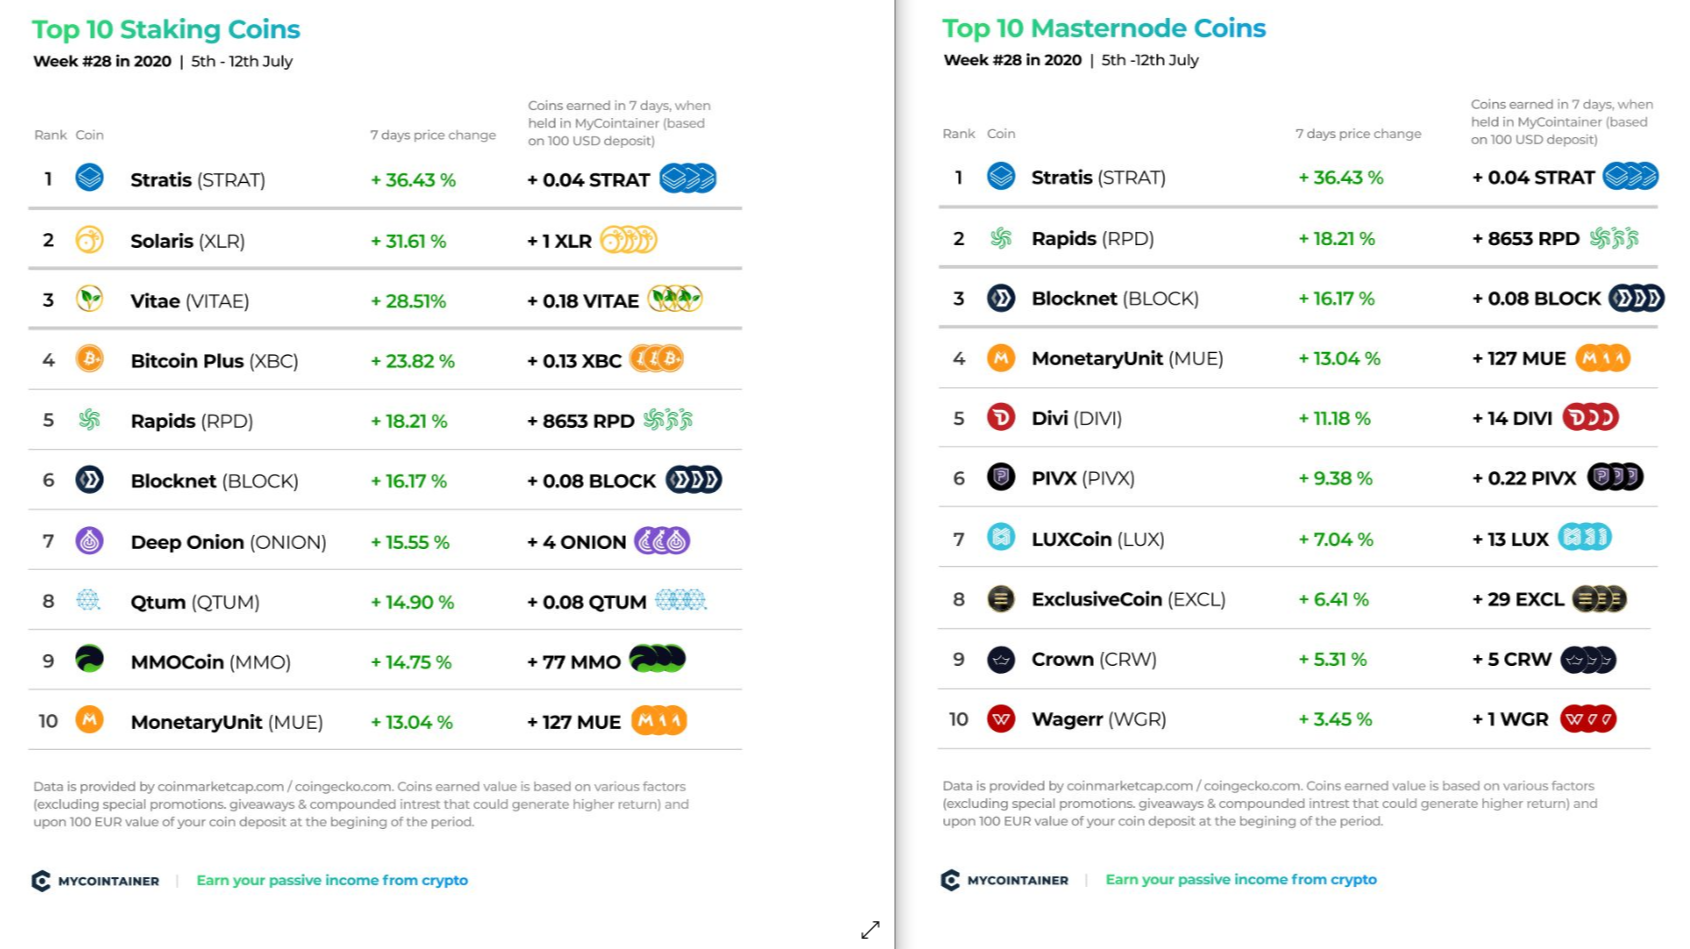 Passive income with Crypto: Masternodes vs Staking | Callisto Network